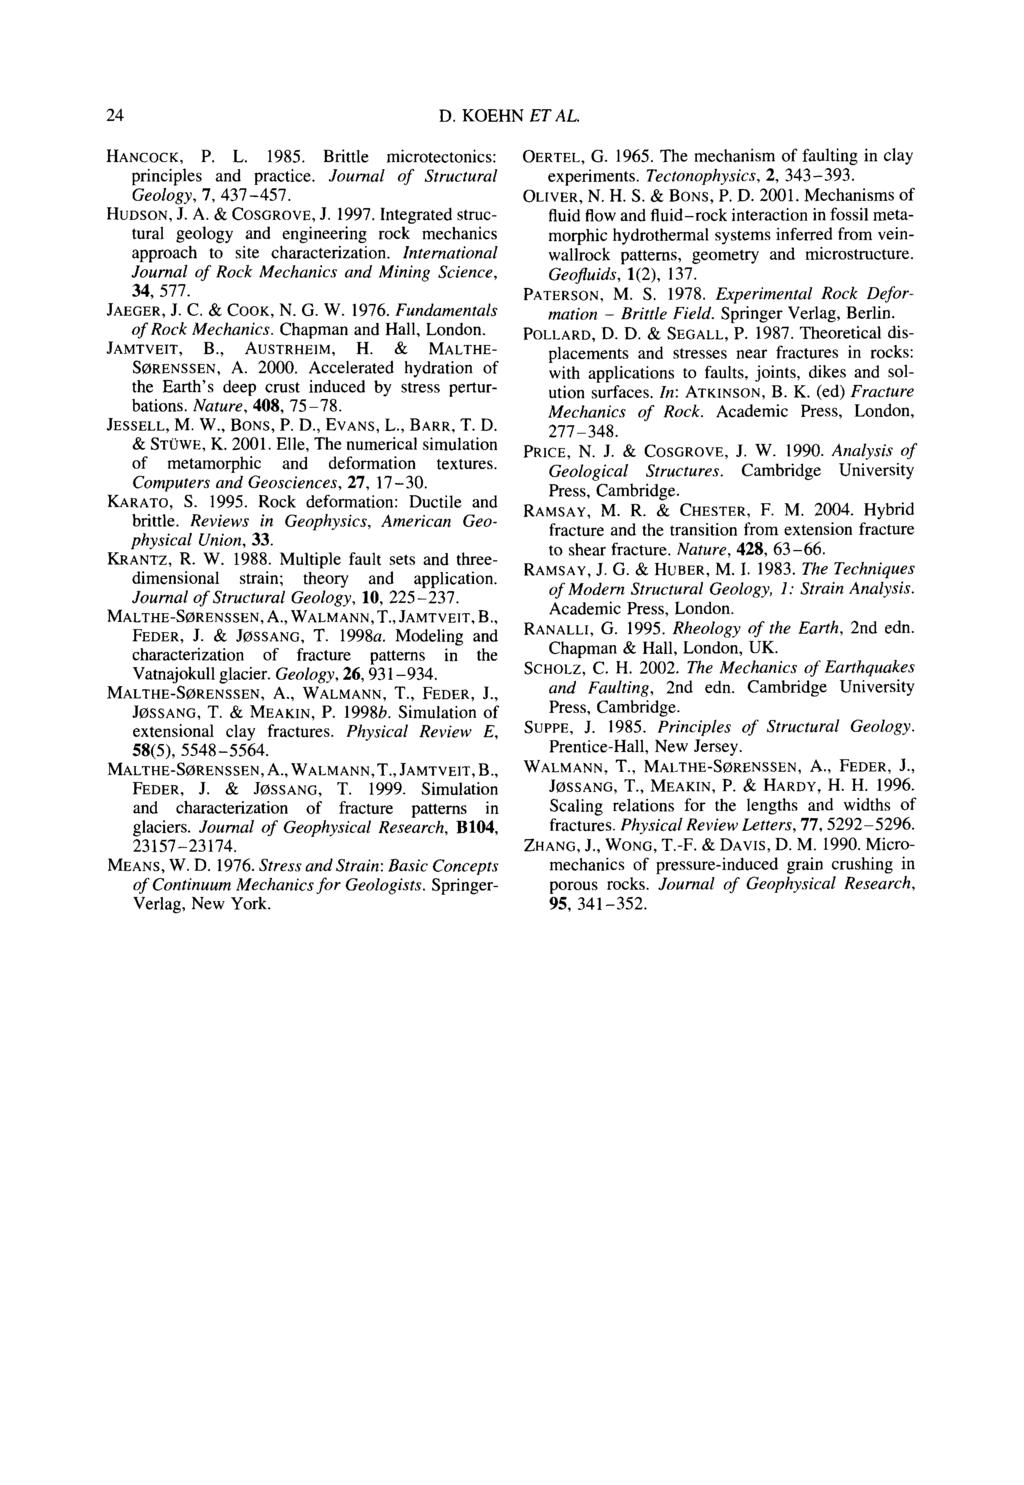 24 D. KOEHN ET AL. HANCOCK, P. L. 1985. Brittle microtectonics: principles and practice. Journal of Structural Geology, 7, 437-457. HUDSON, J. A. 8z COSGROVE, J. 1997.